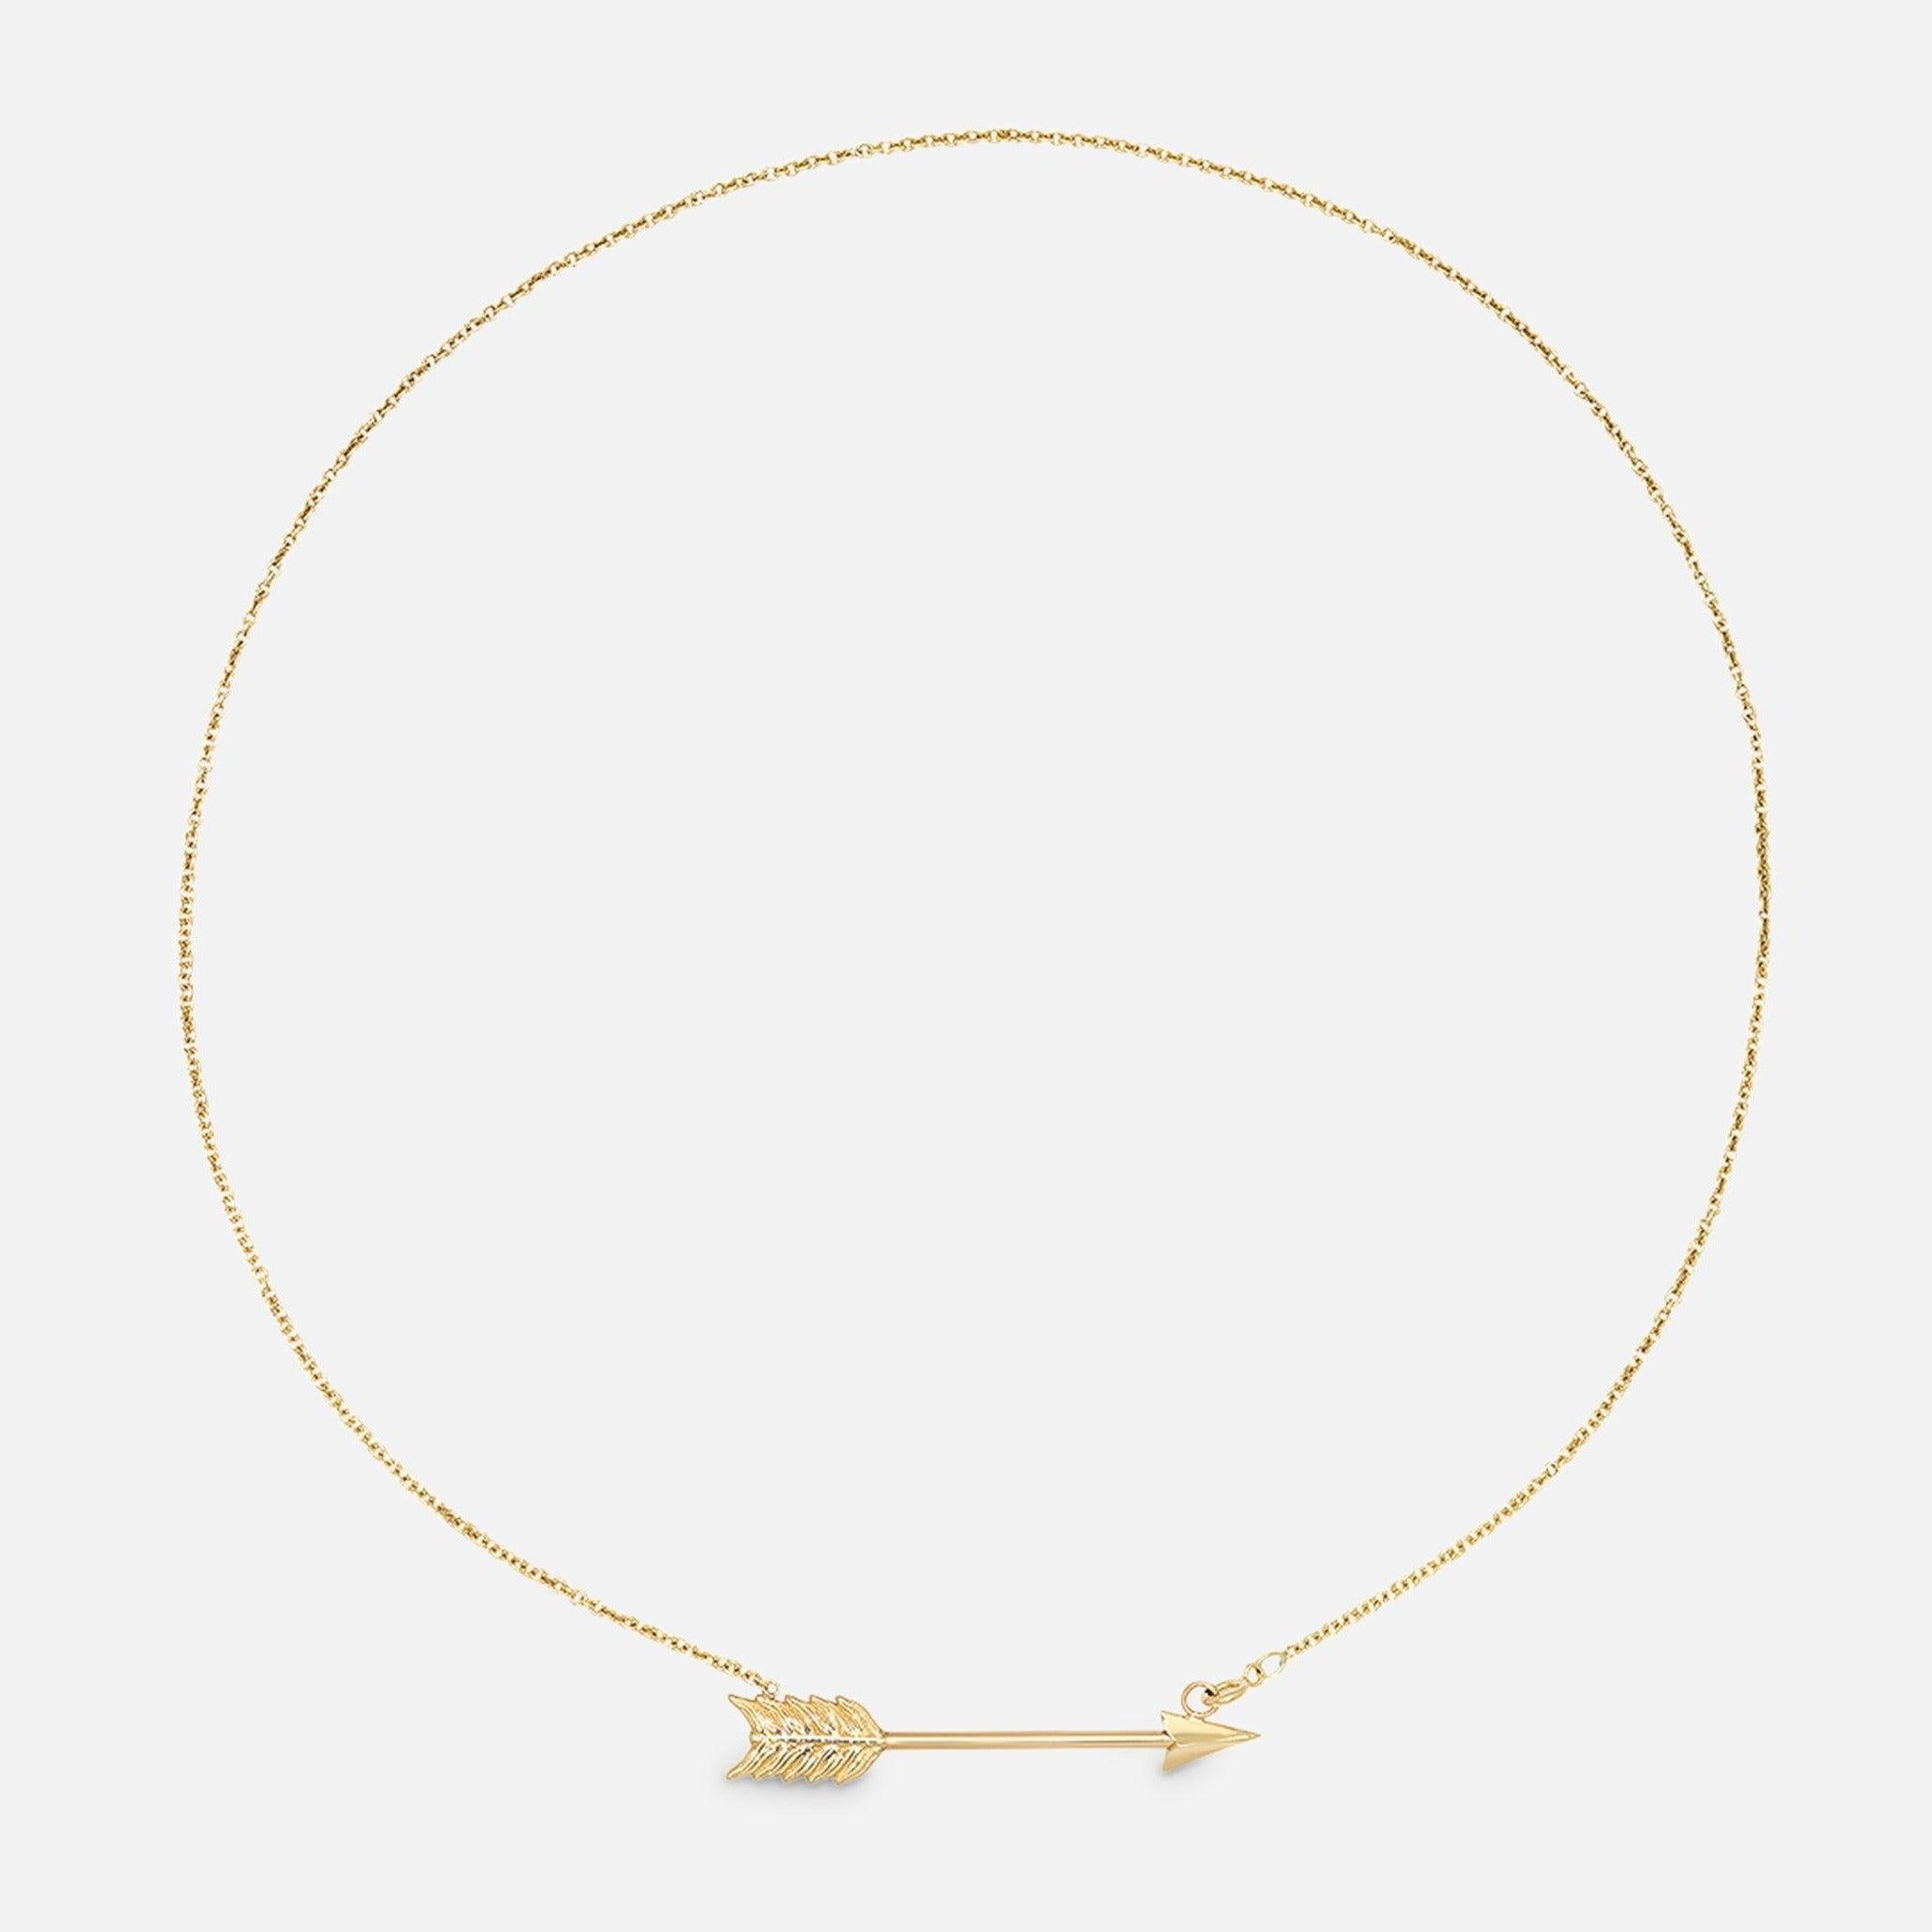 Kimberly Doyle Arrow Charm Holder Necklace - at Present